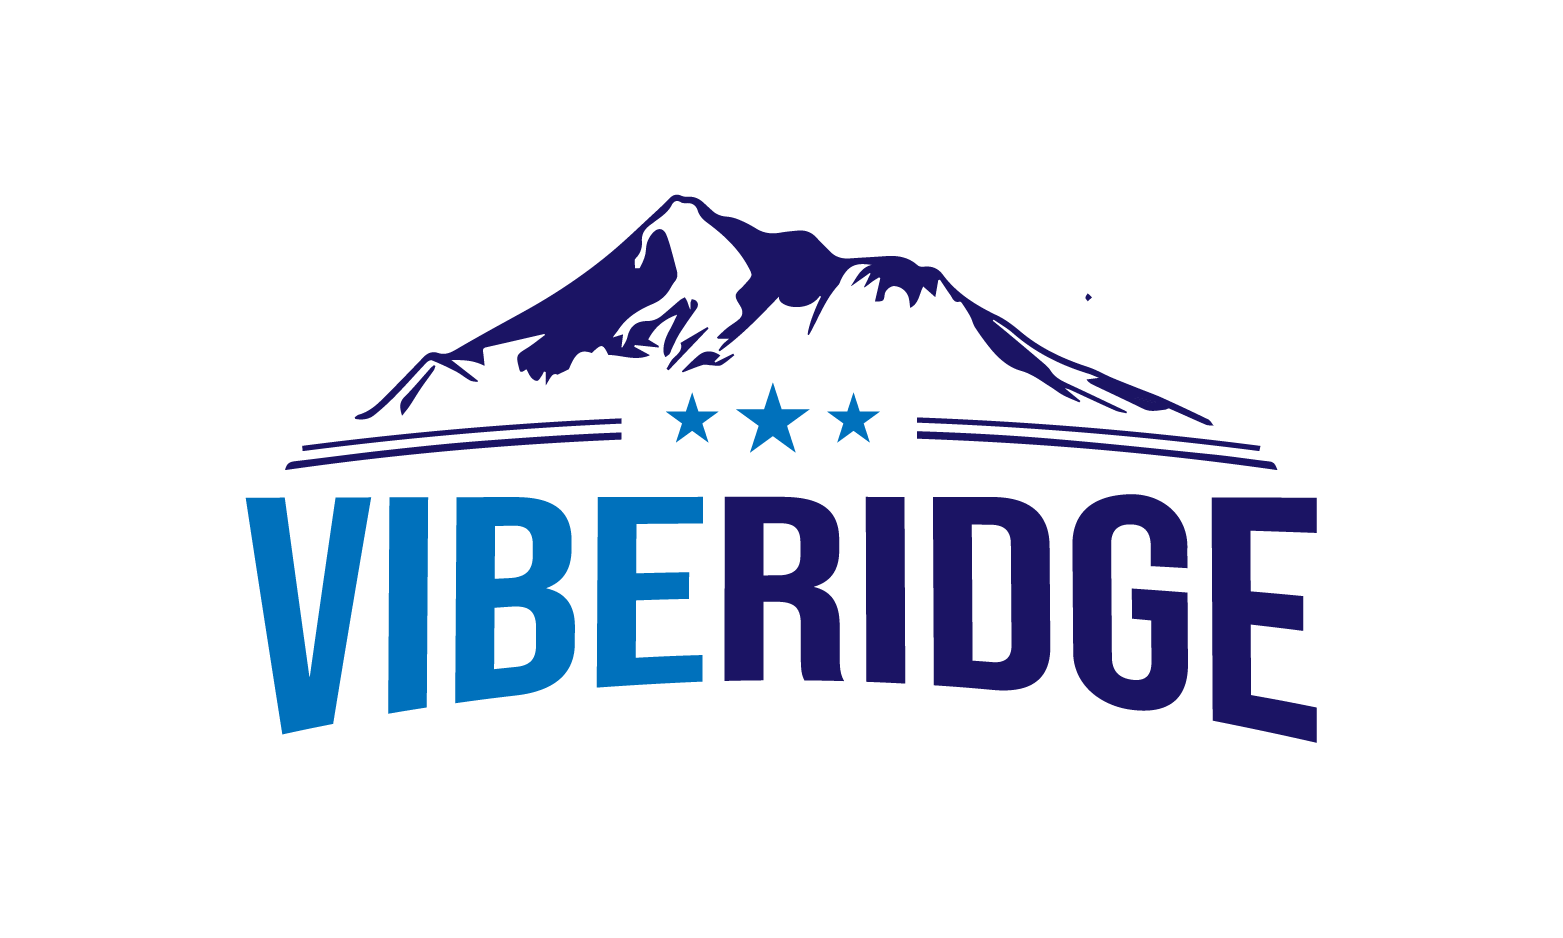 VibeRidge.com - Creative brandable domain for sale